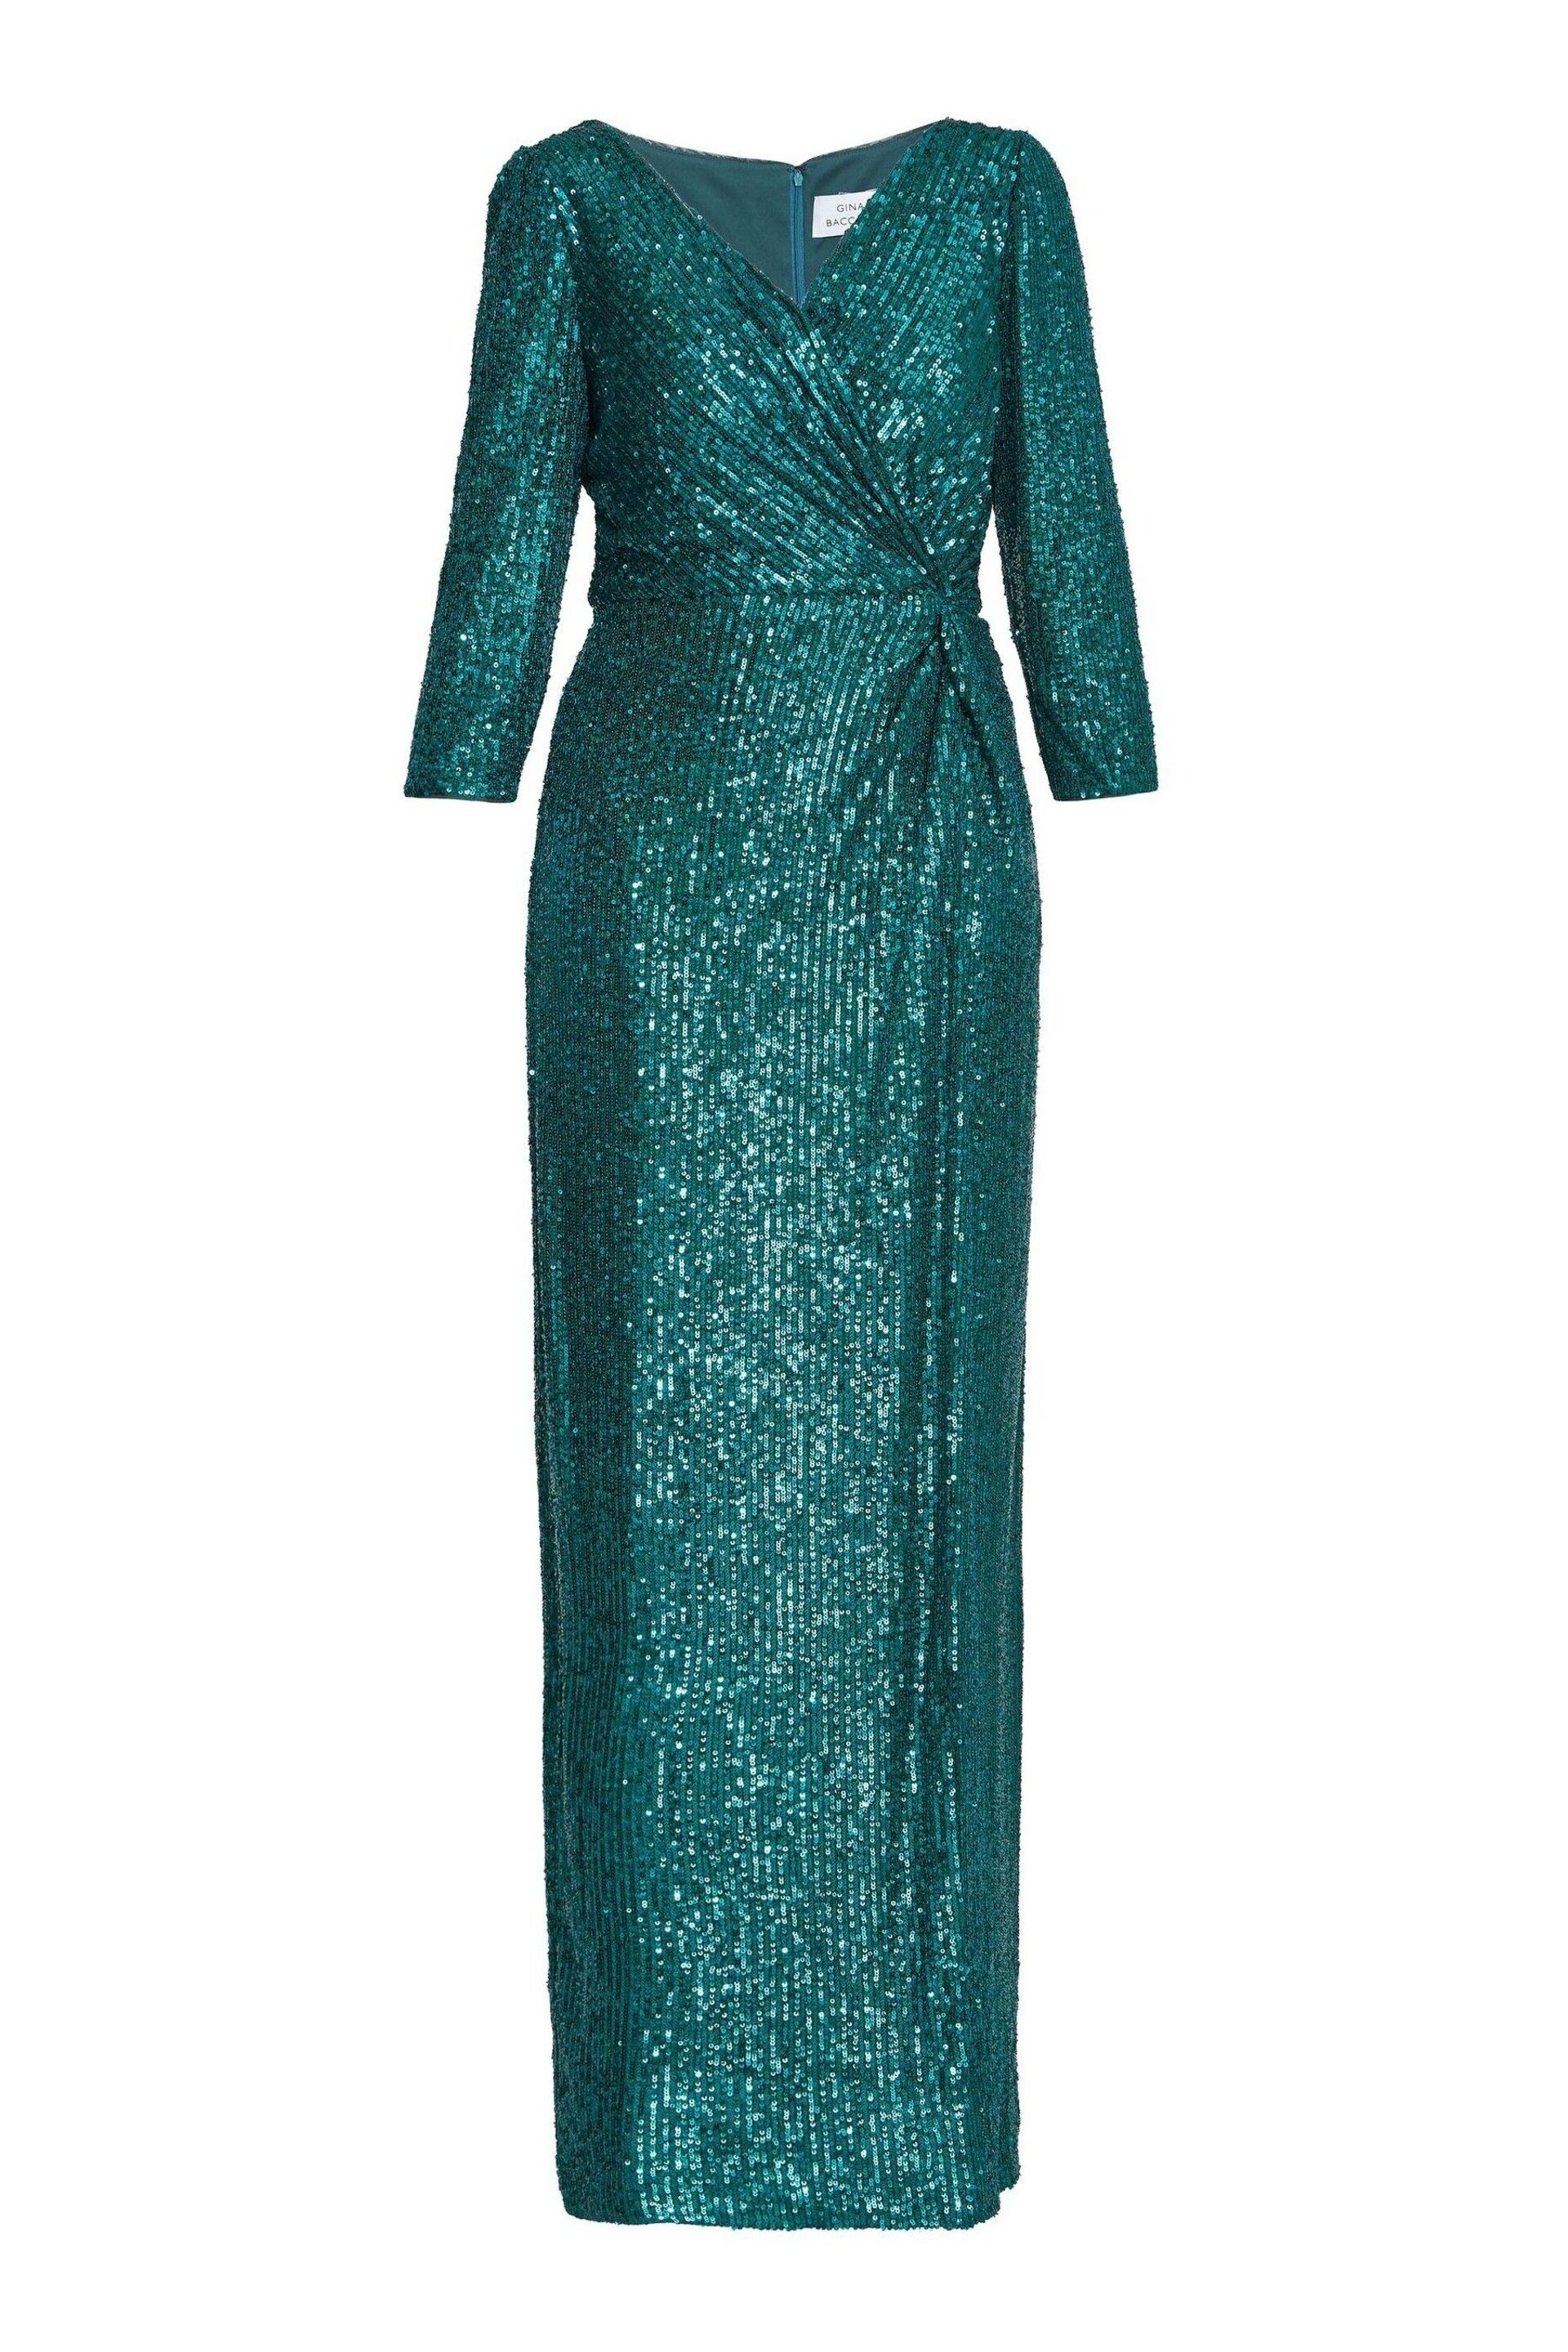 Gina Bacconi Blue Jacynda Sequin 3/4 Sleeve Wrap Dress With Twist - Image 5 of 5